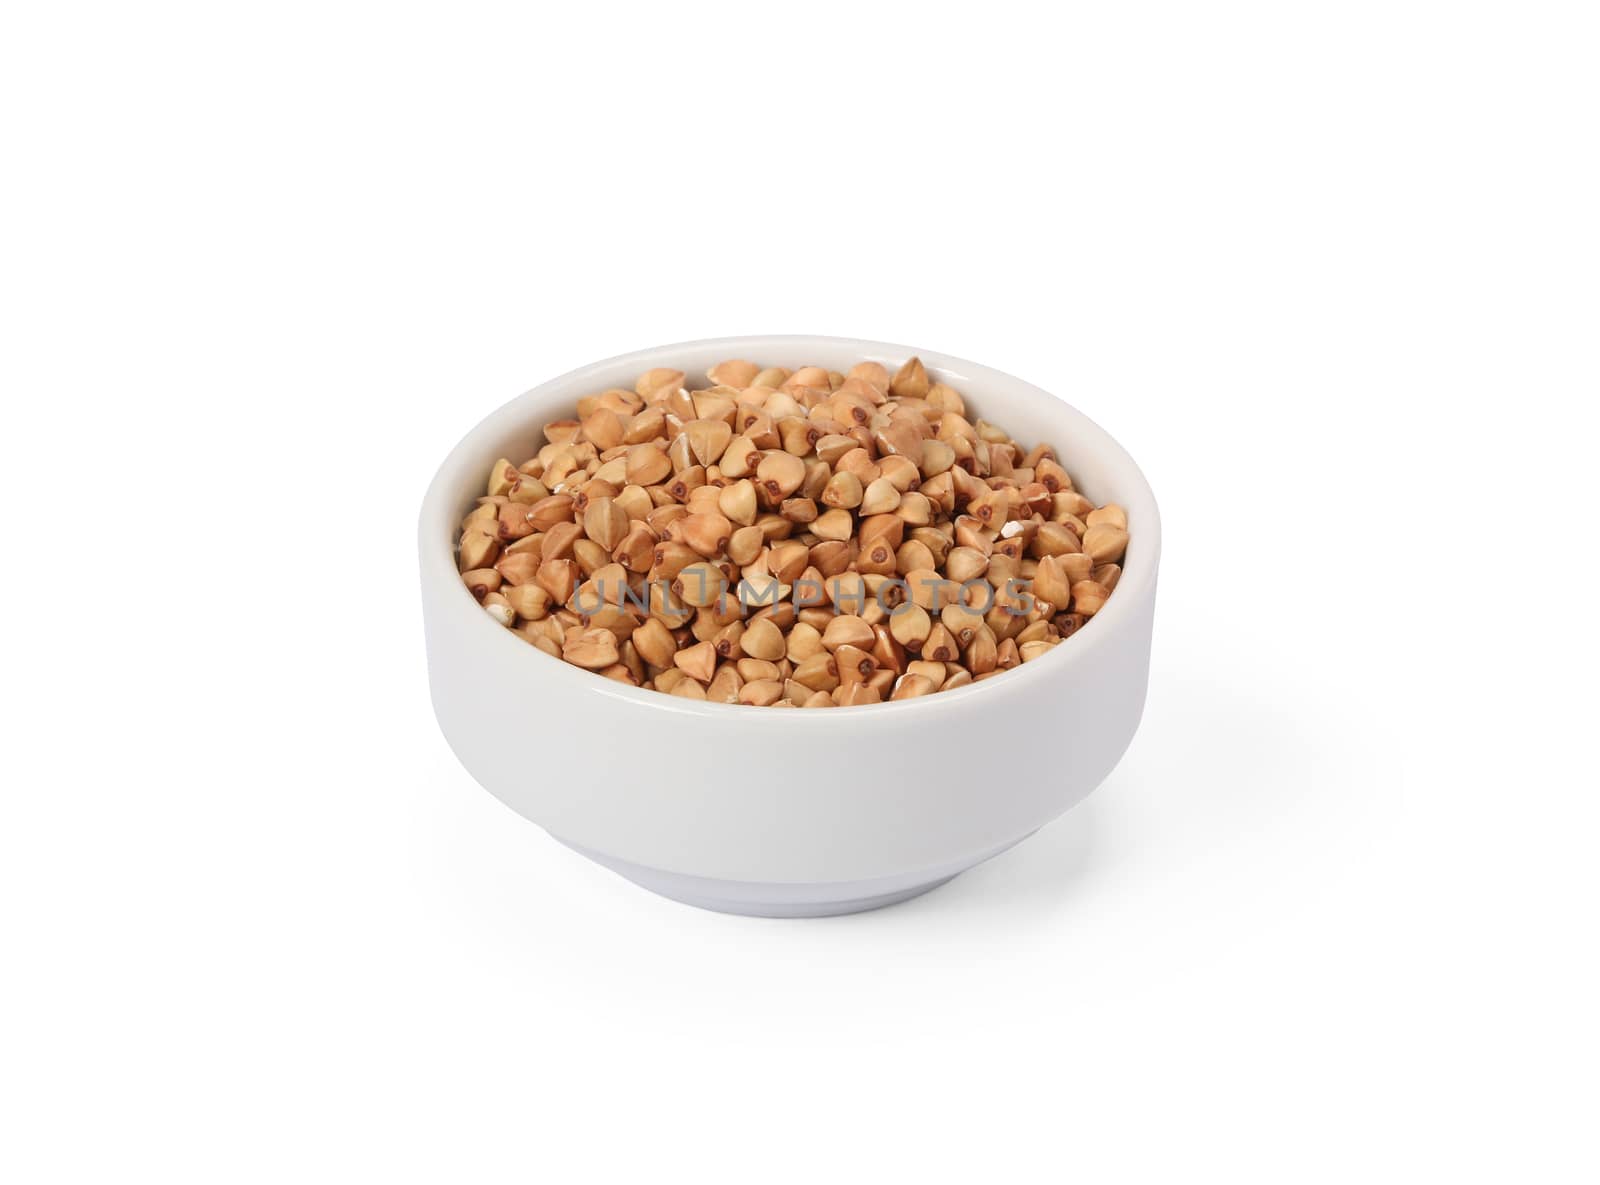 Buckwheat groats in whitebowl isolated on white background.